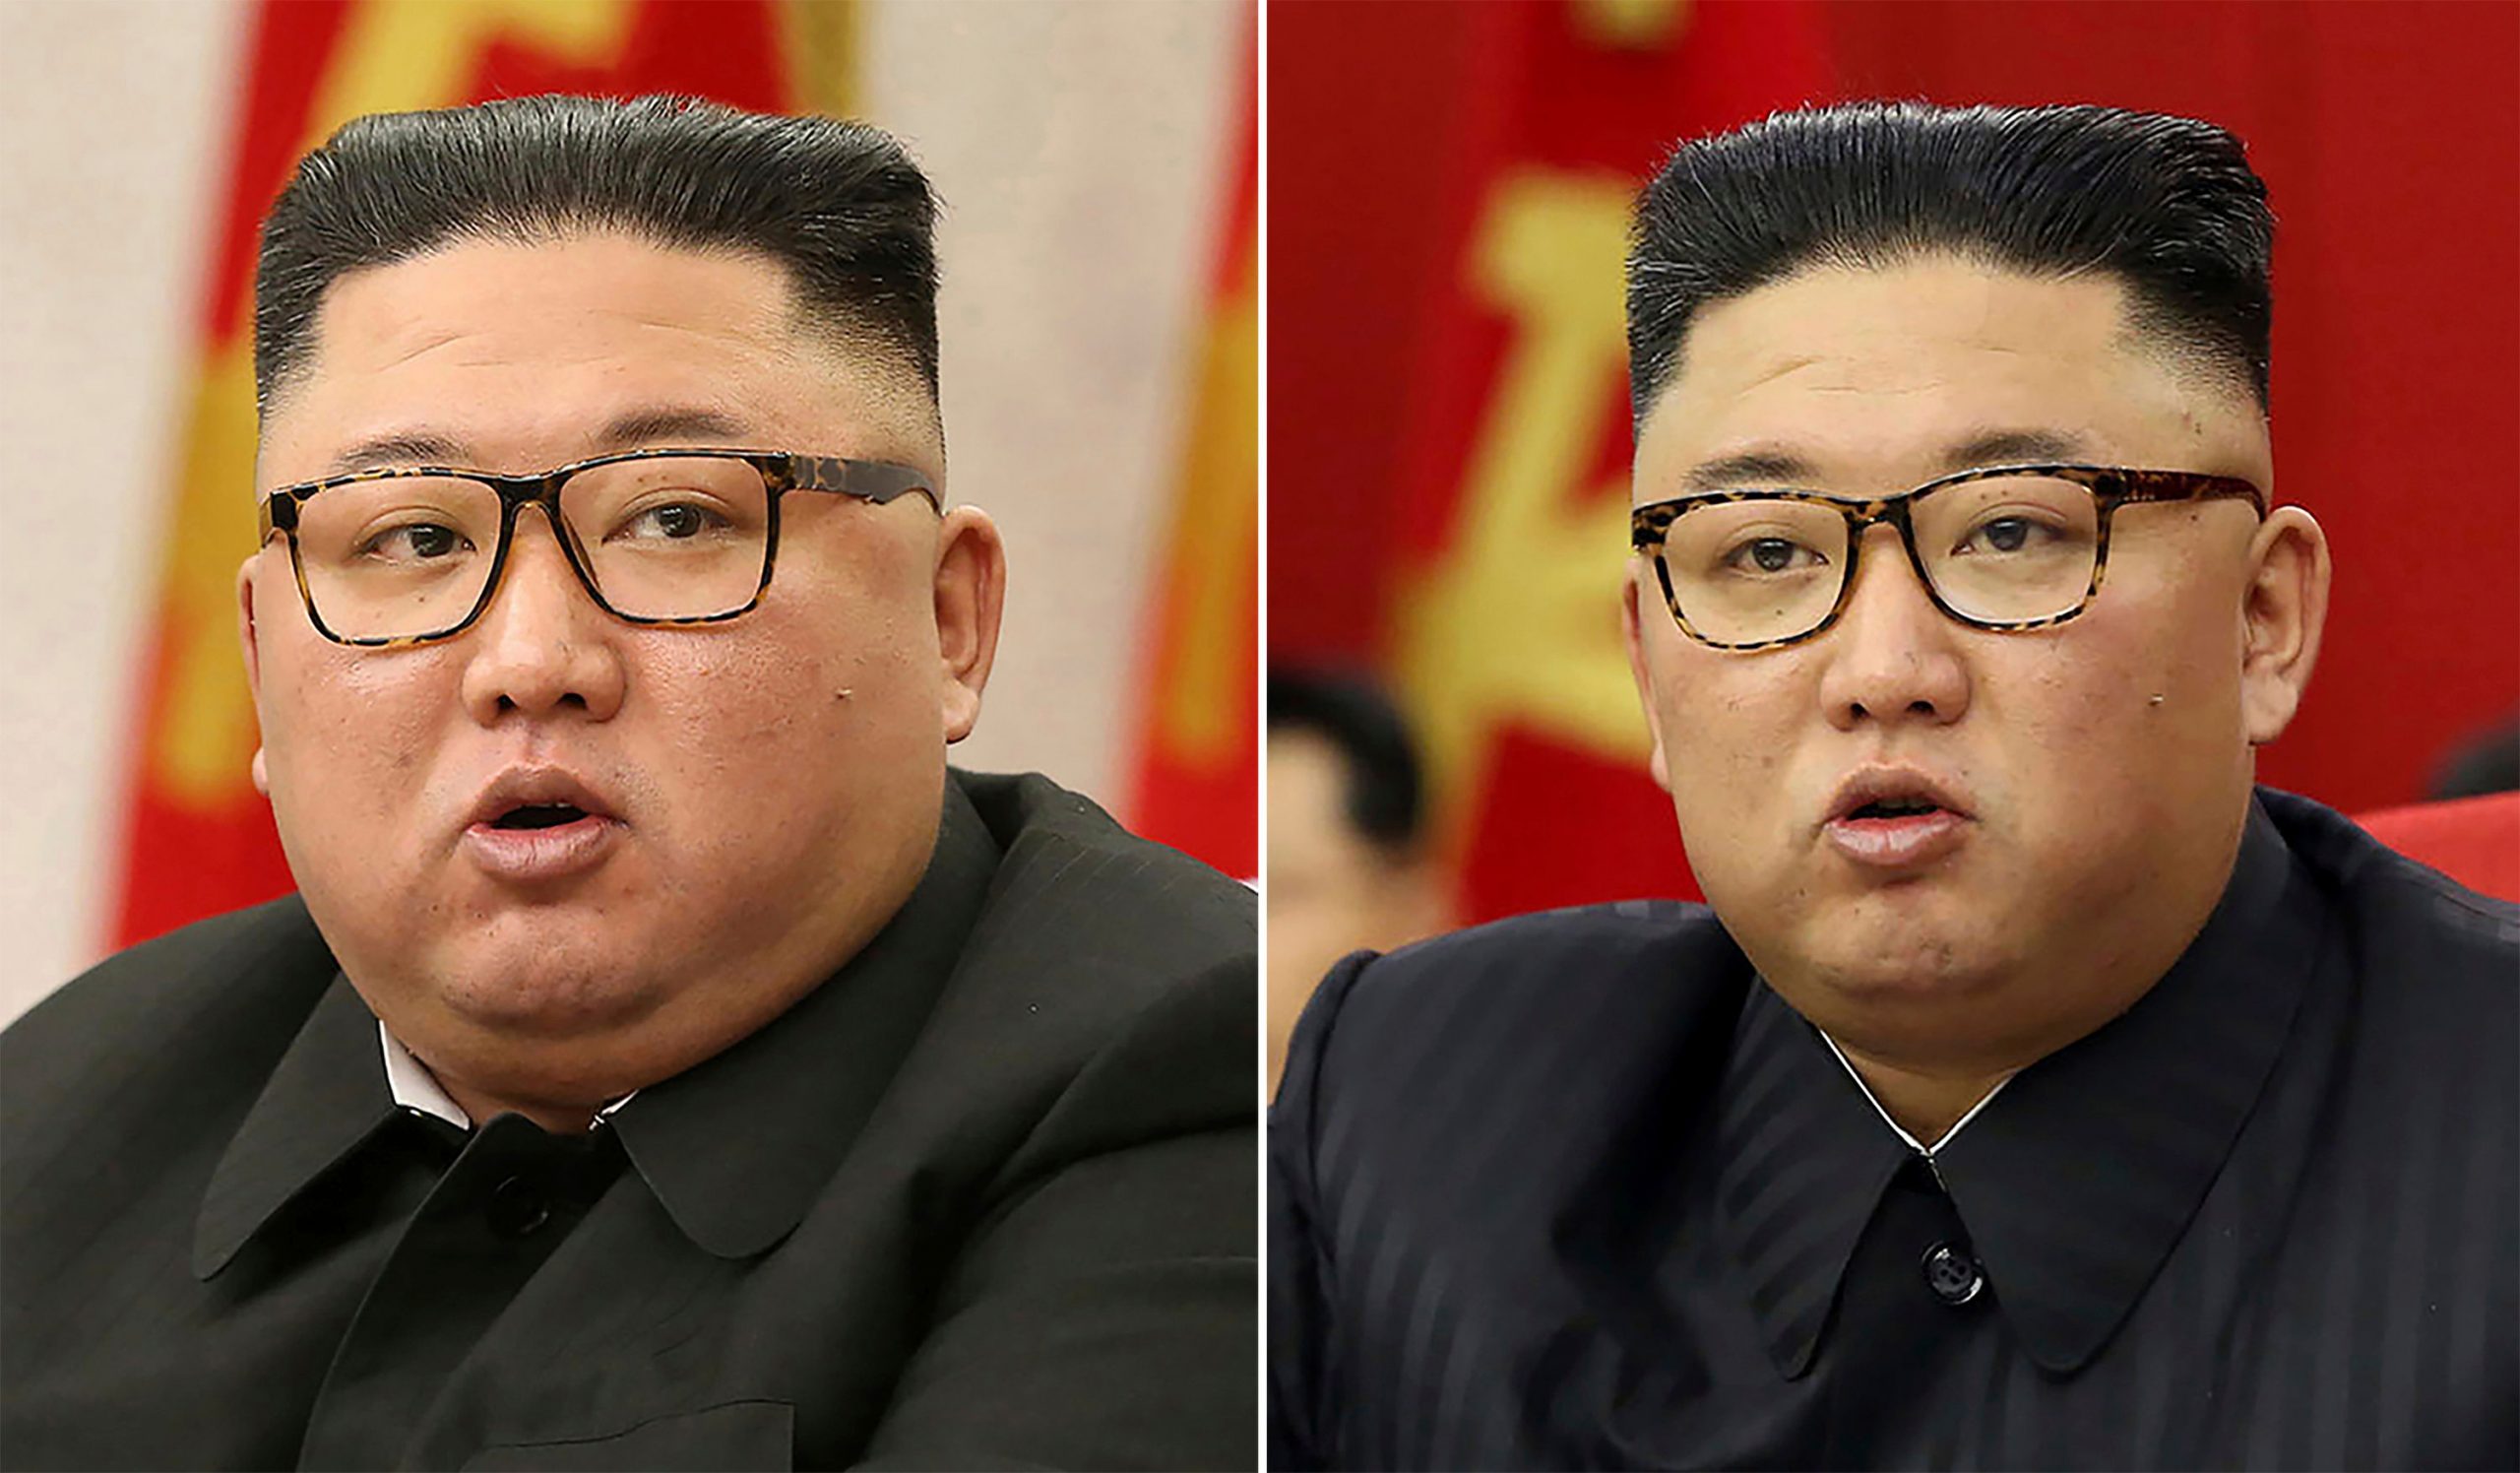 North Korea bans leather coats, because Kim Jong-un wears them